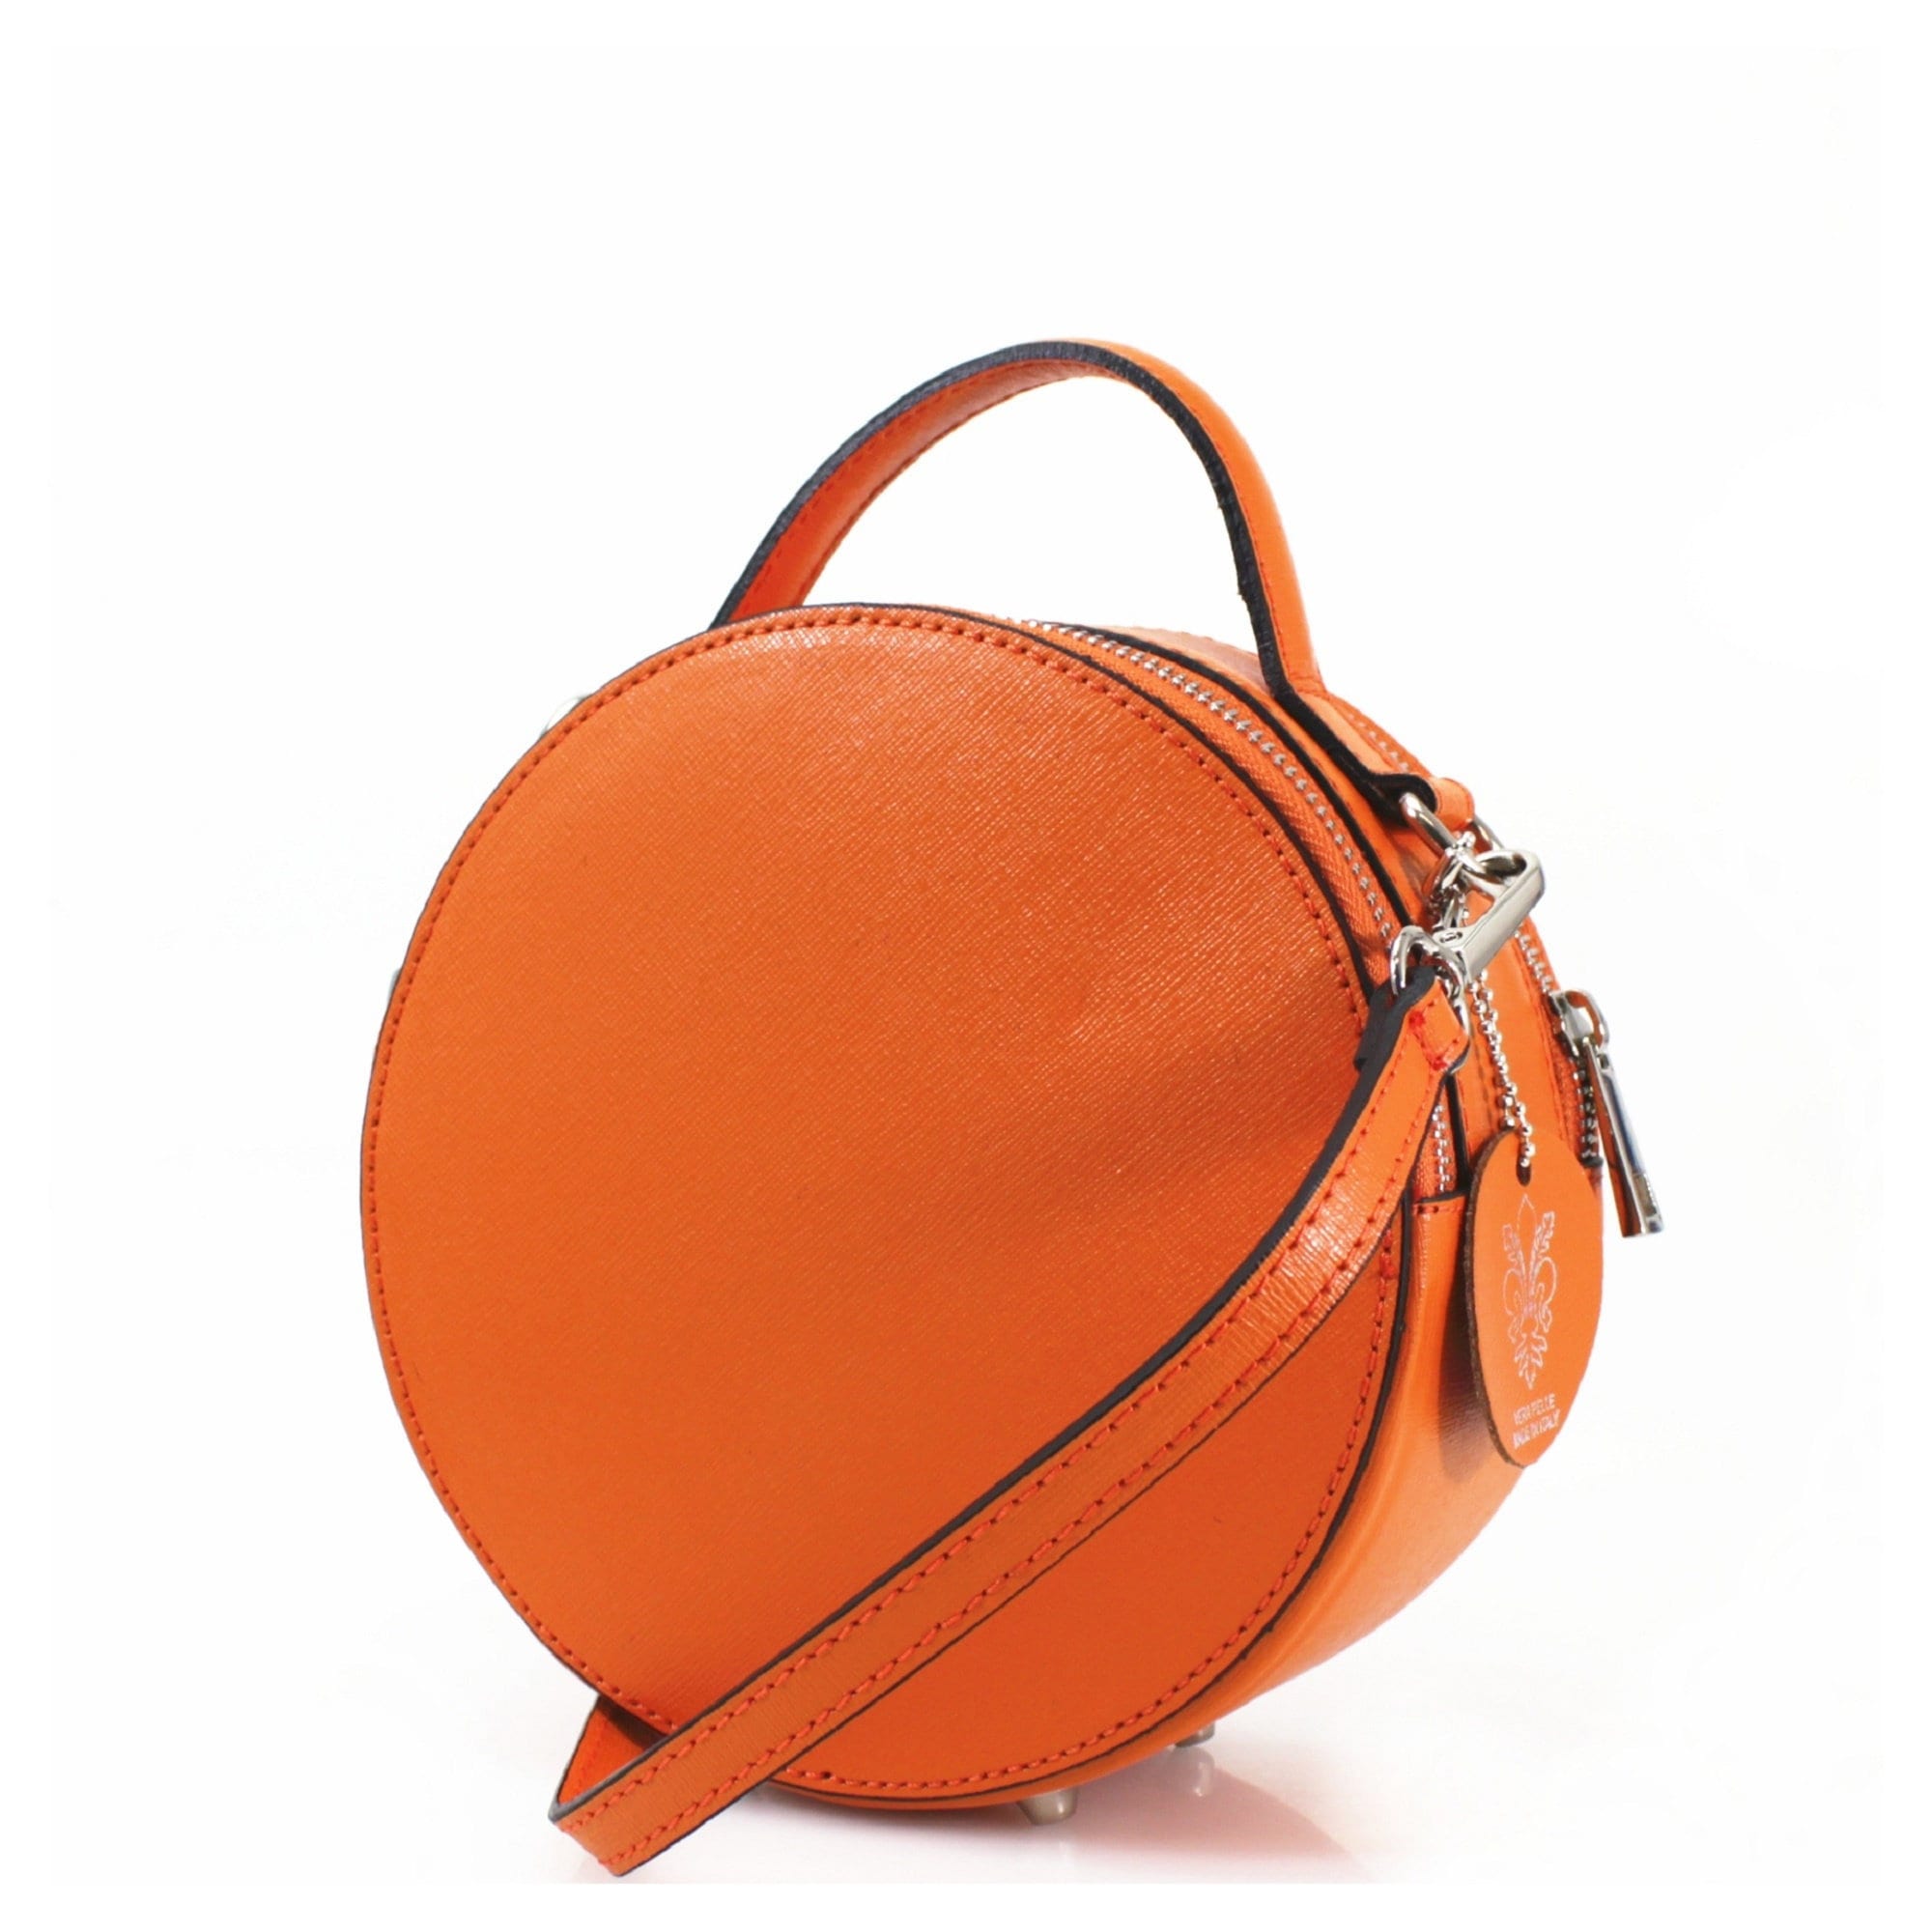 Leather Adjustable Replacement Strap Shoulder Bag Cross Body Bag Purse  Handbag For Women, 43-51 Inch